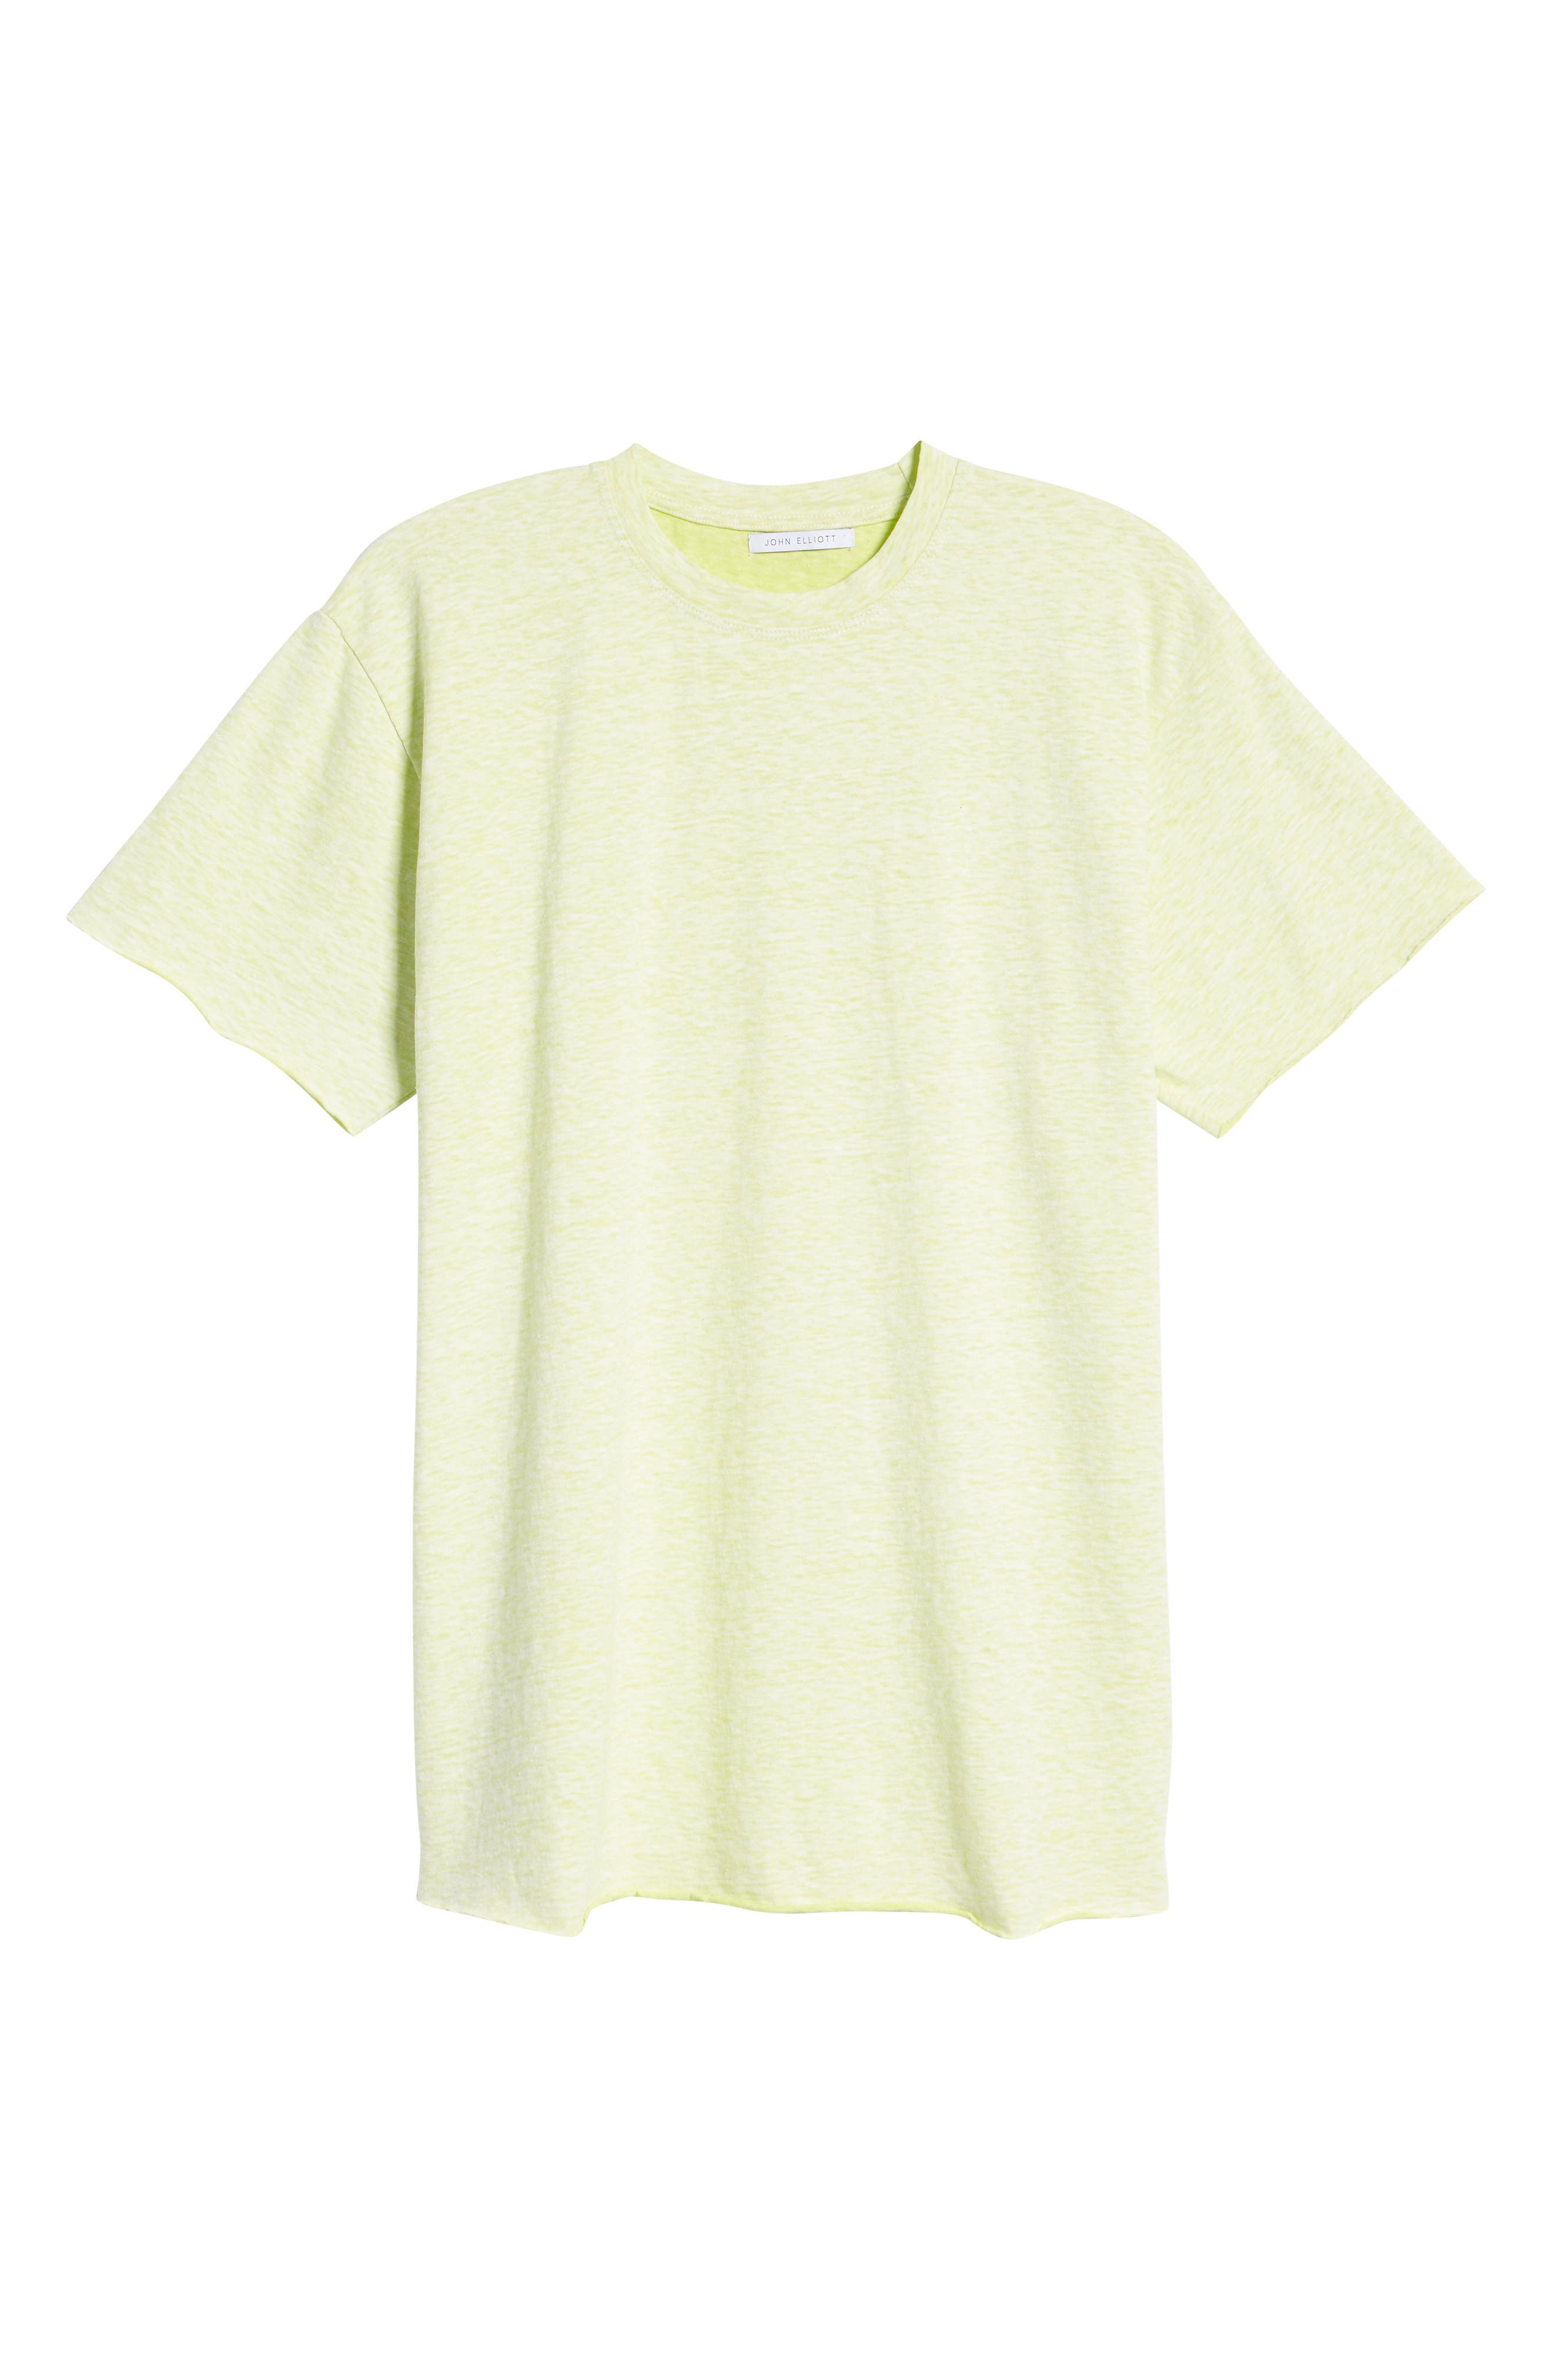 John Elliott Men's Pad Print Anti Expo Cotton T-Shirt in Topo at Nordstrom, Size Xx-Large